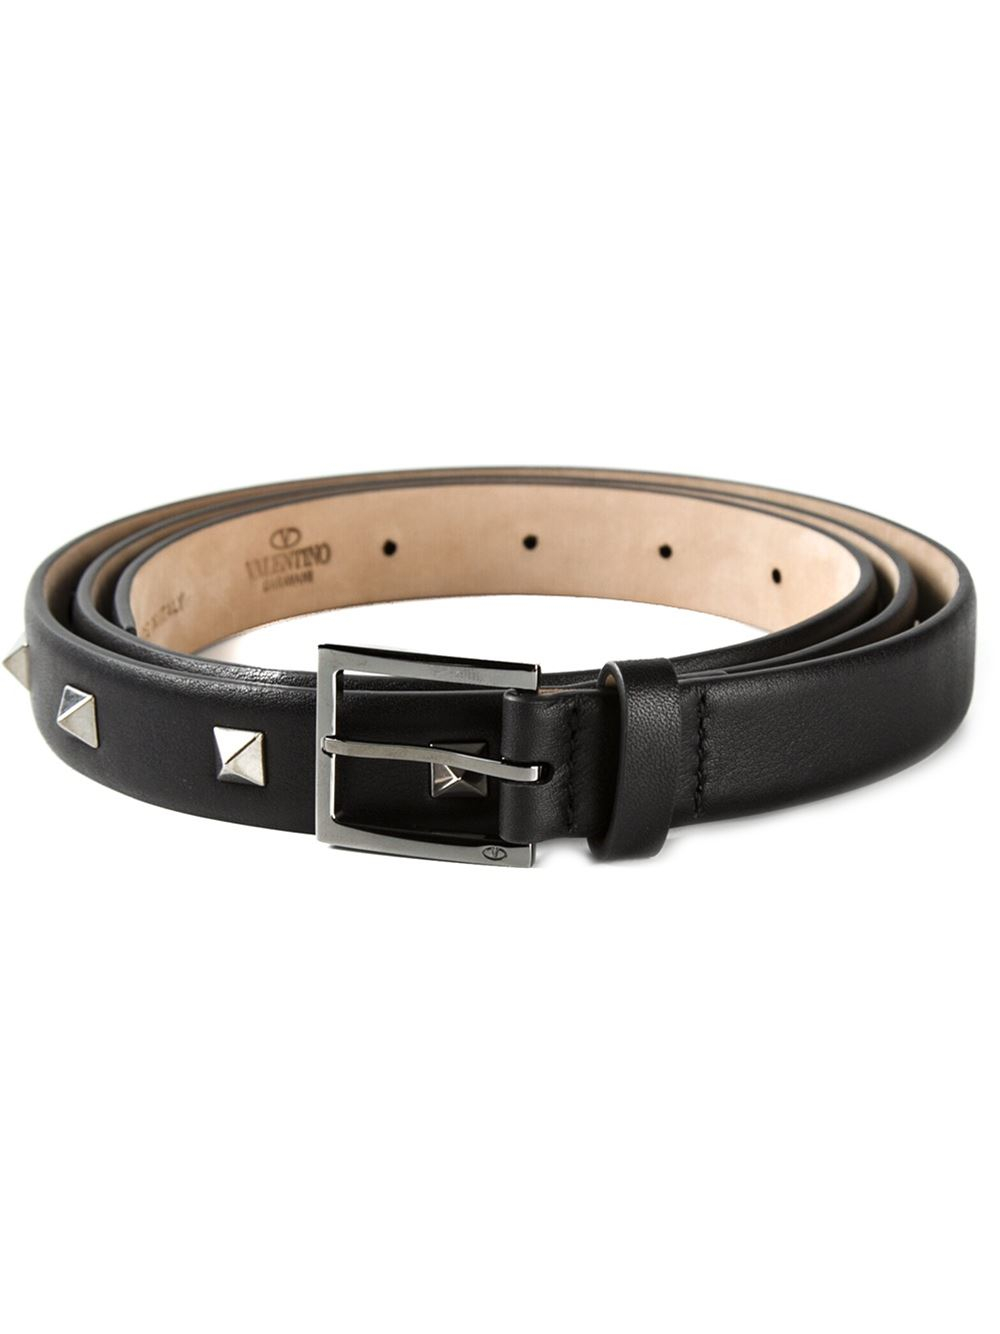 Valentino 'Rockstud' Belt in Black for Men - Lyst